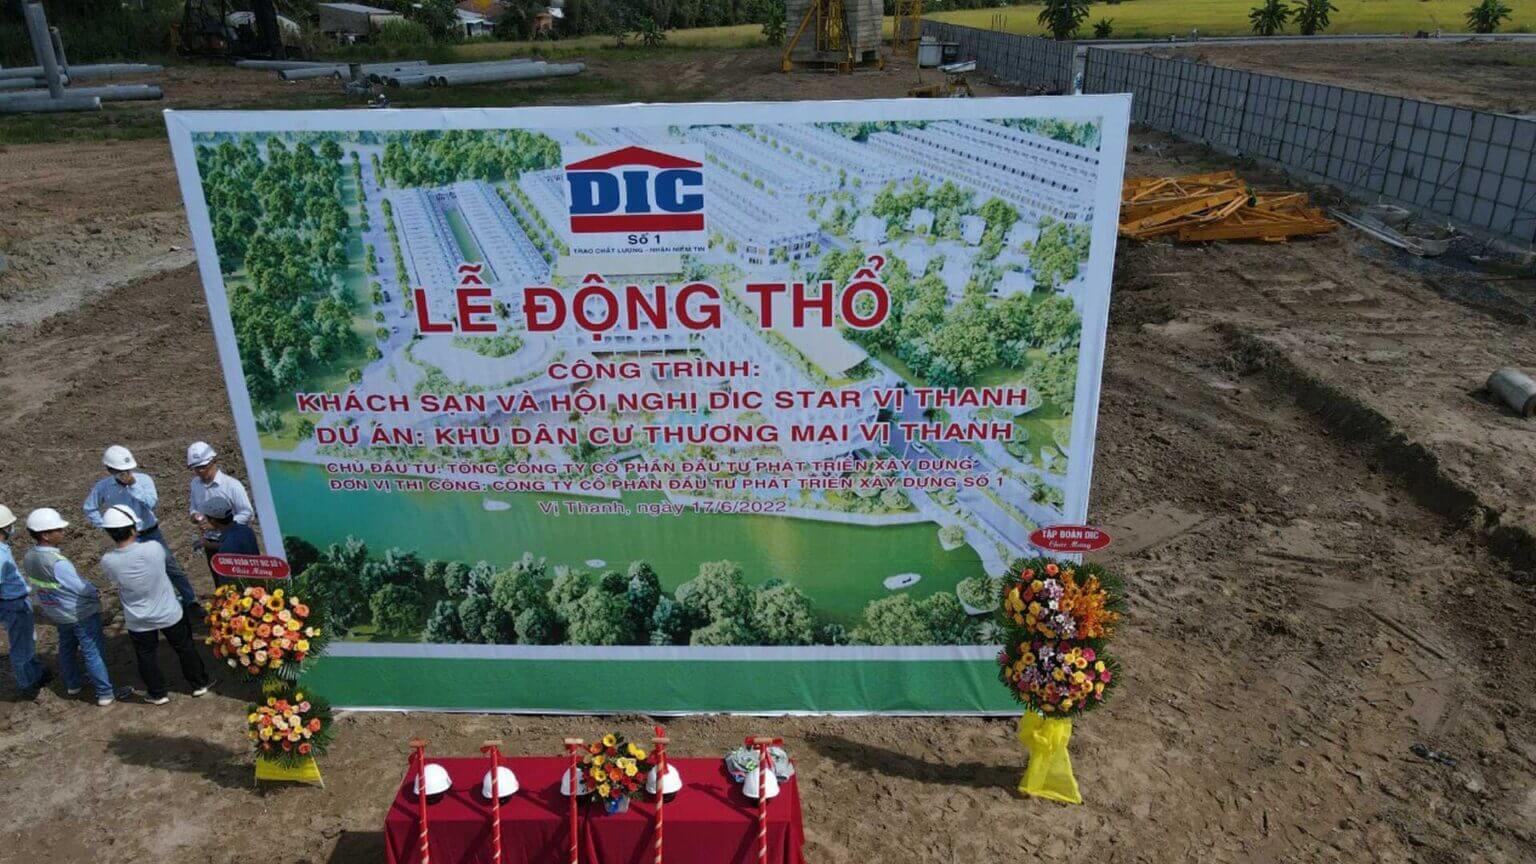 Dong tho Du an DIC Victory City 2022 1536x864 1